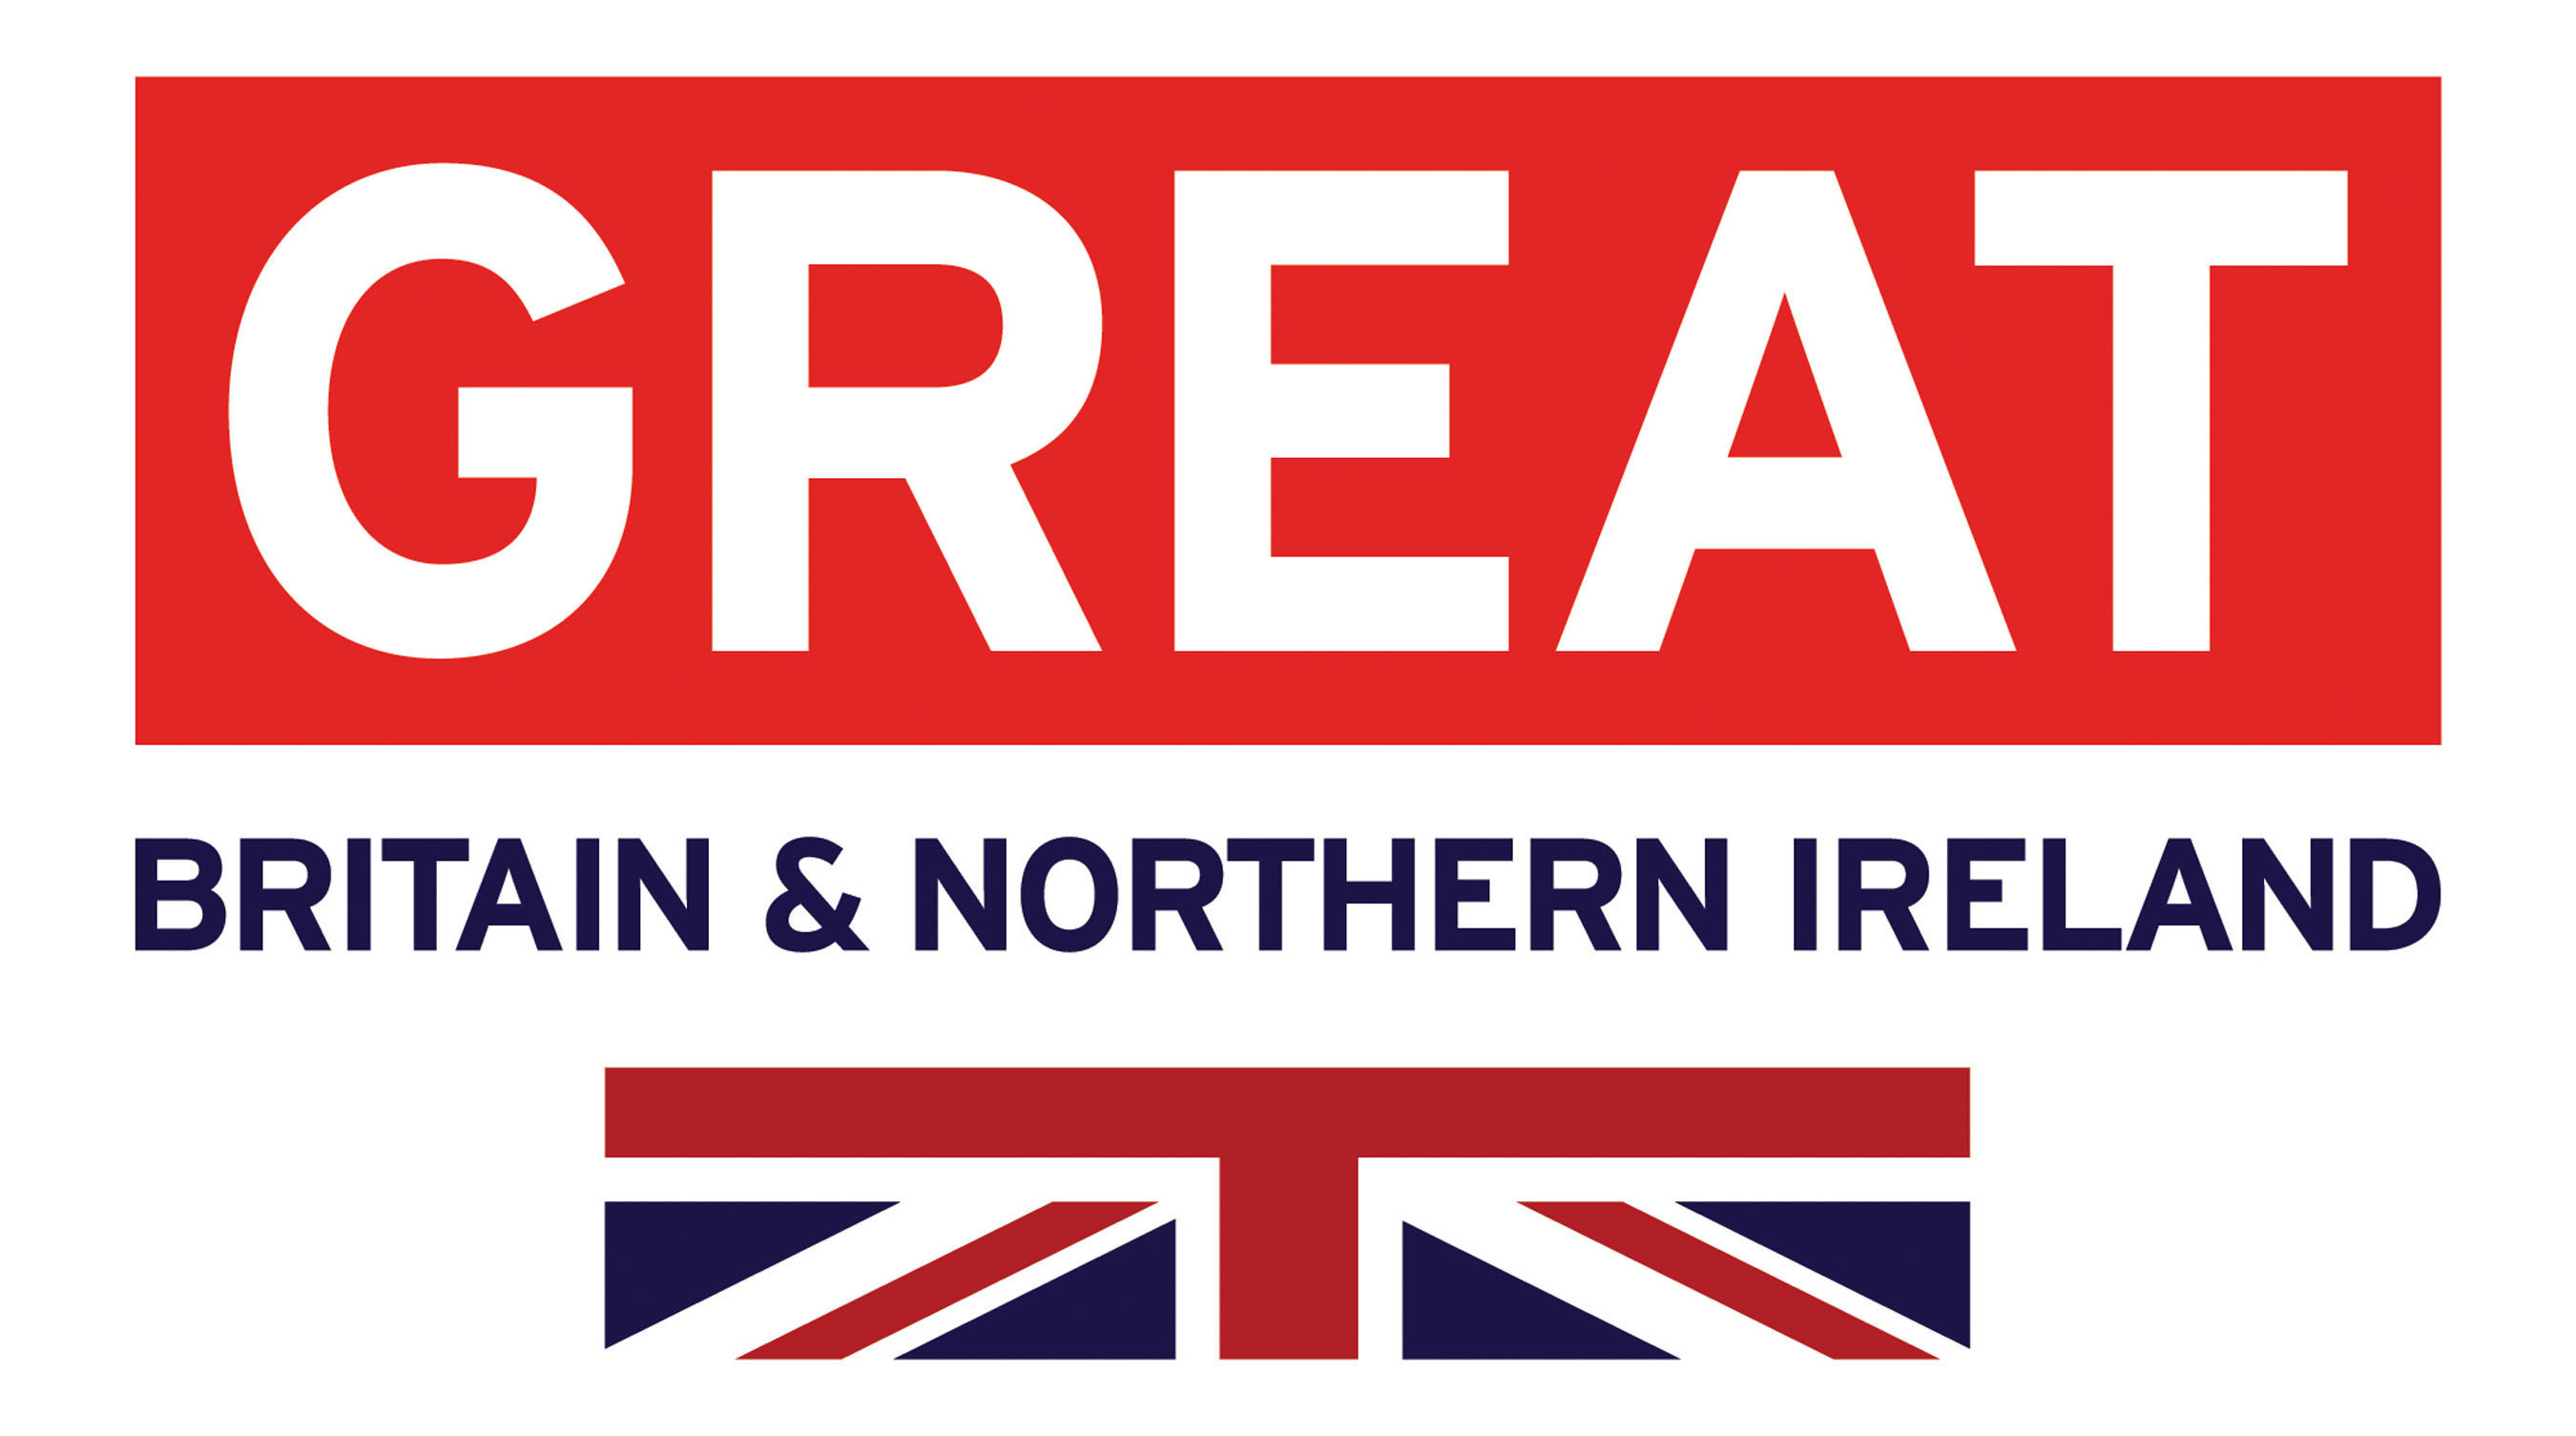 GREAT Britain campaign www.gov.uk/britainisgreat